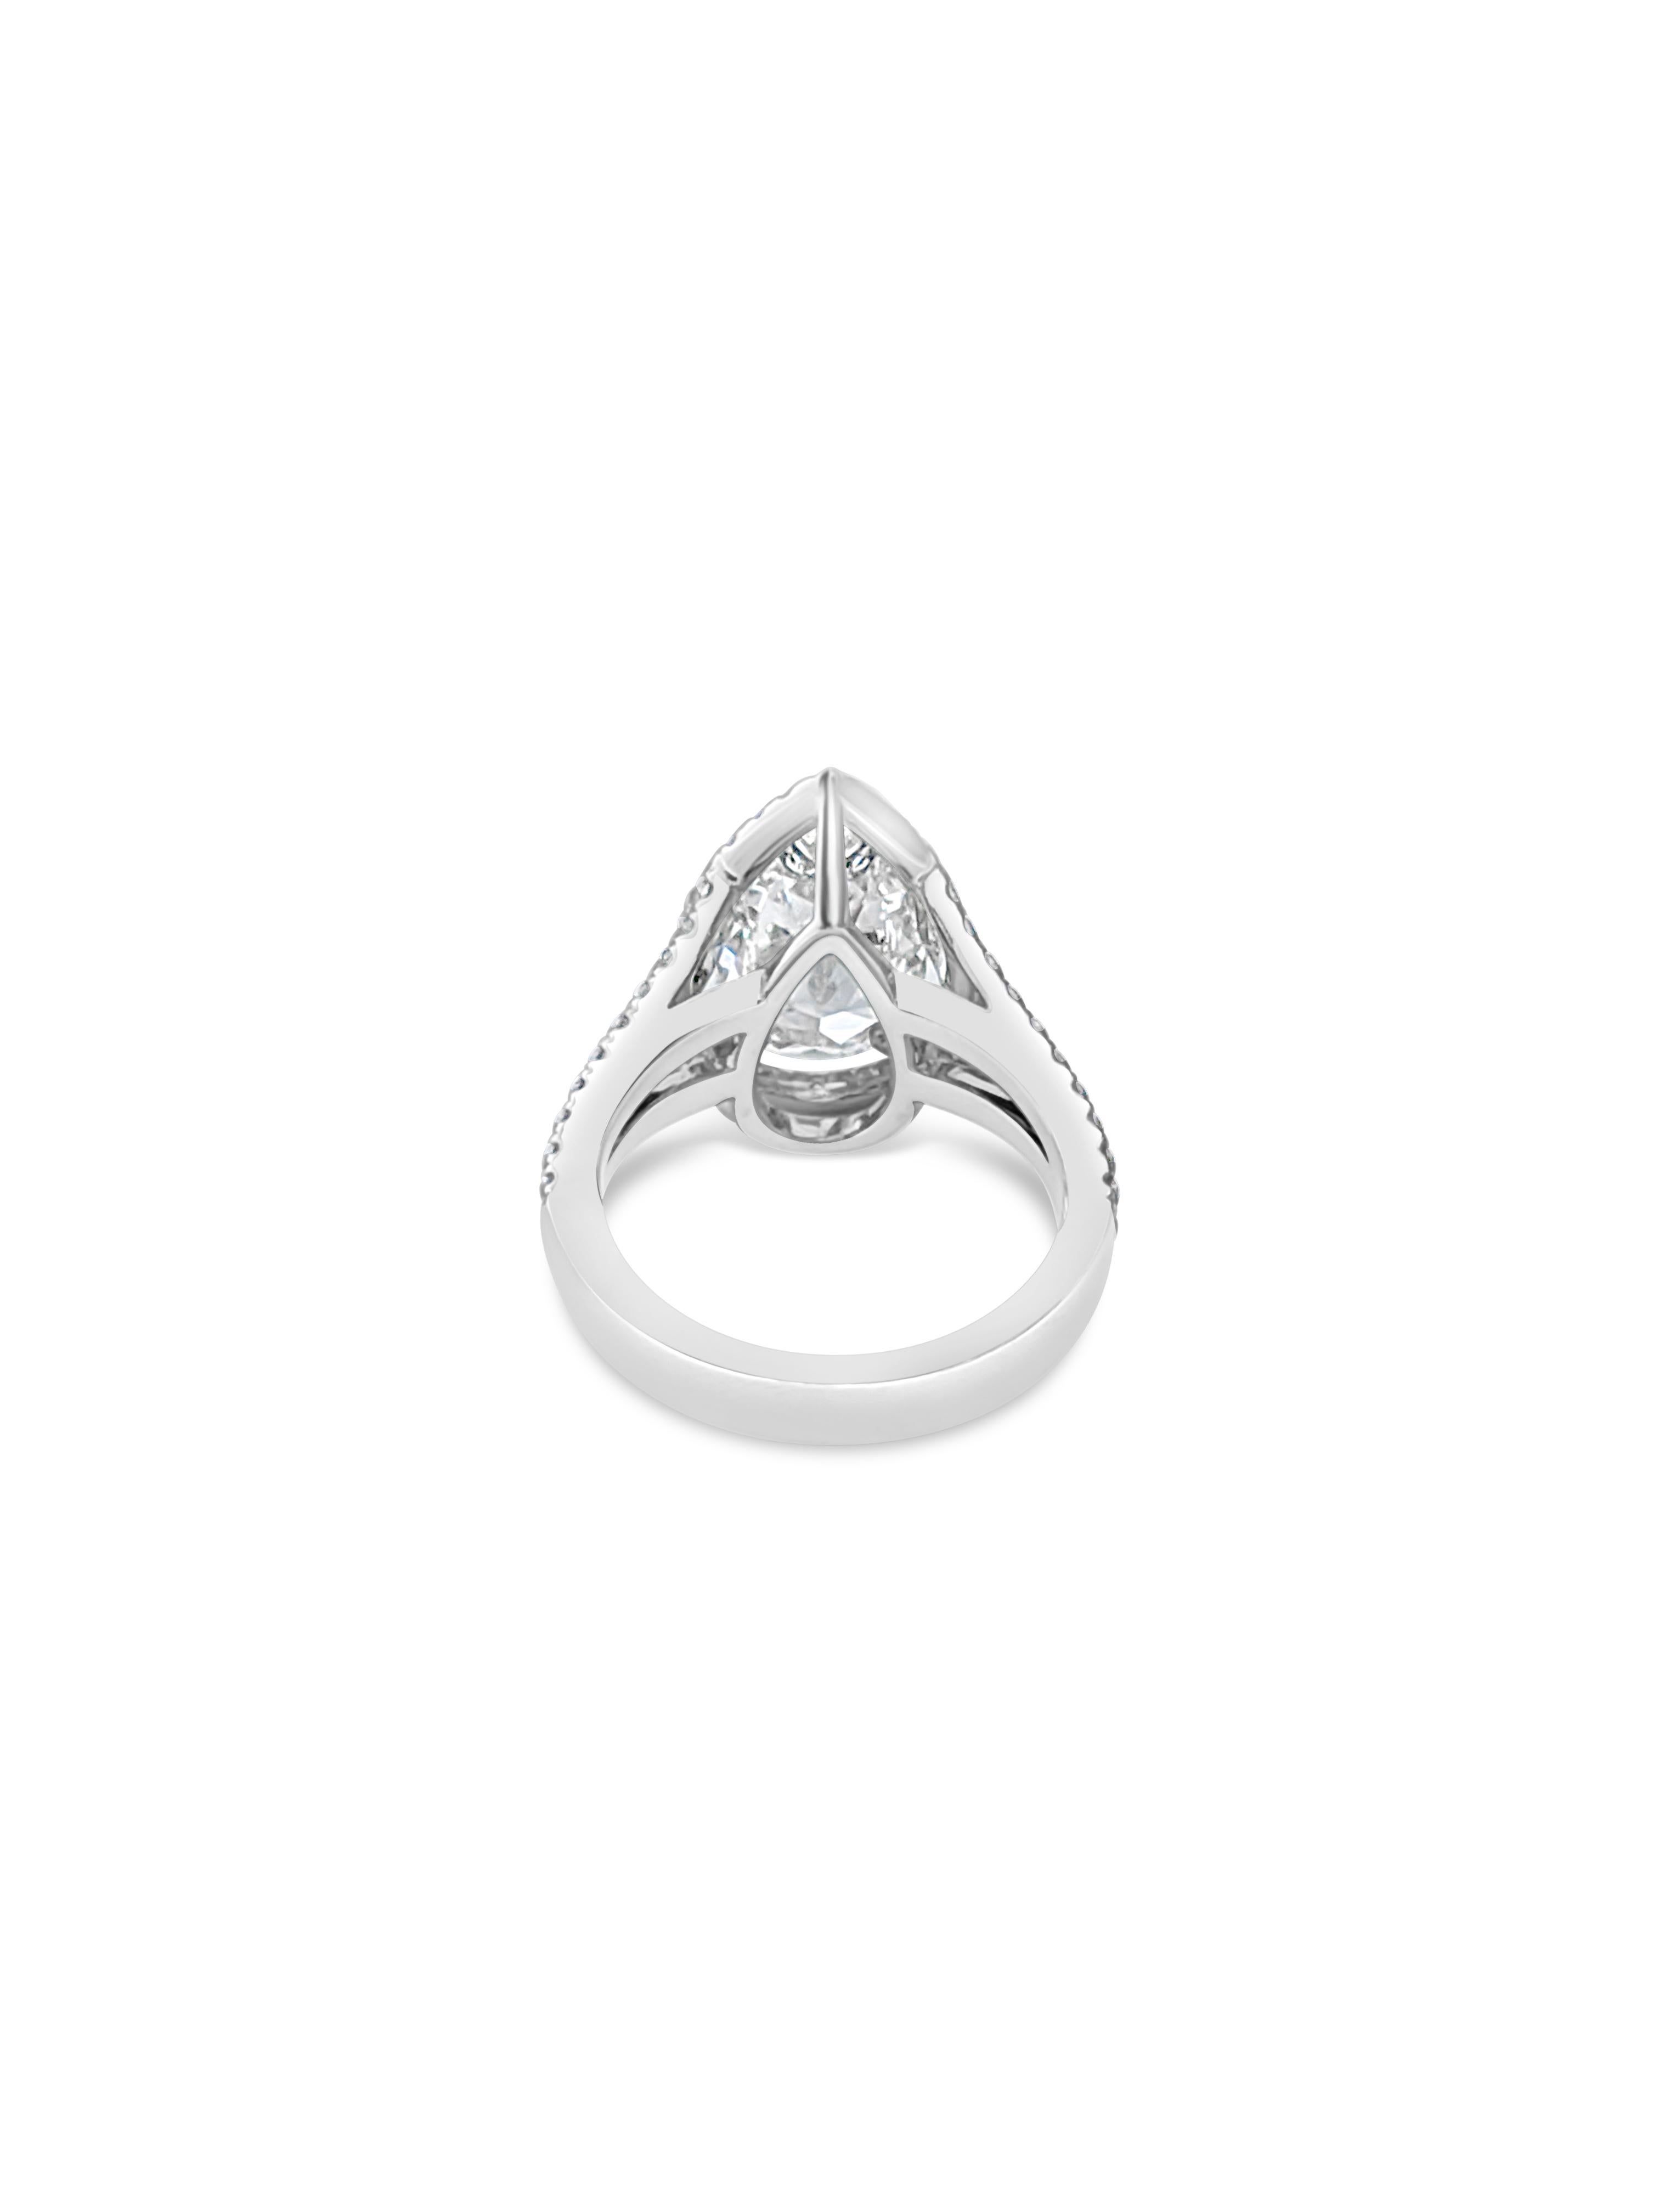 pear shaped engagement ring split shank